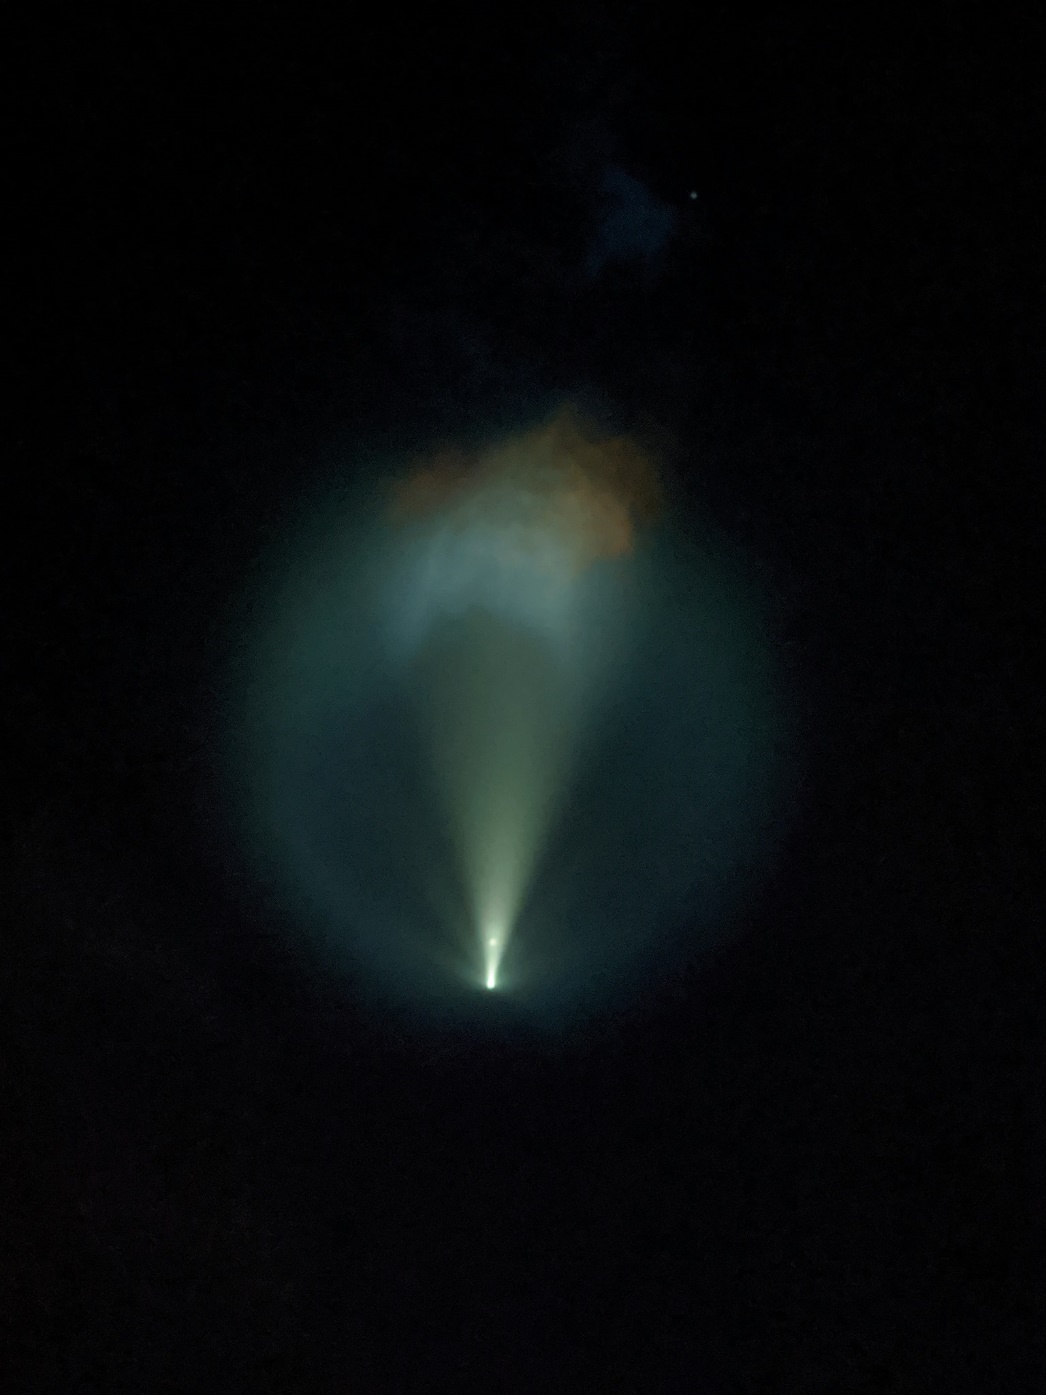 Falcon 9 Inspiration4 Plume Effect, Photo Courtesy Cliff Lethbridge, Spaceline